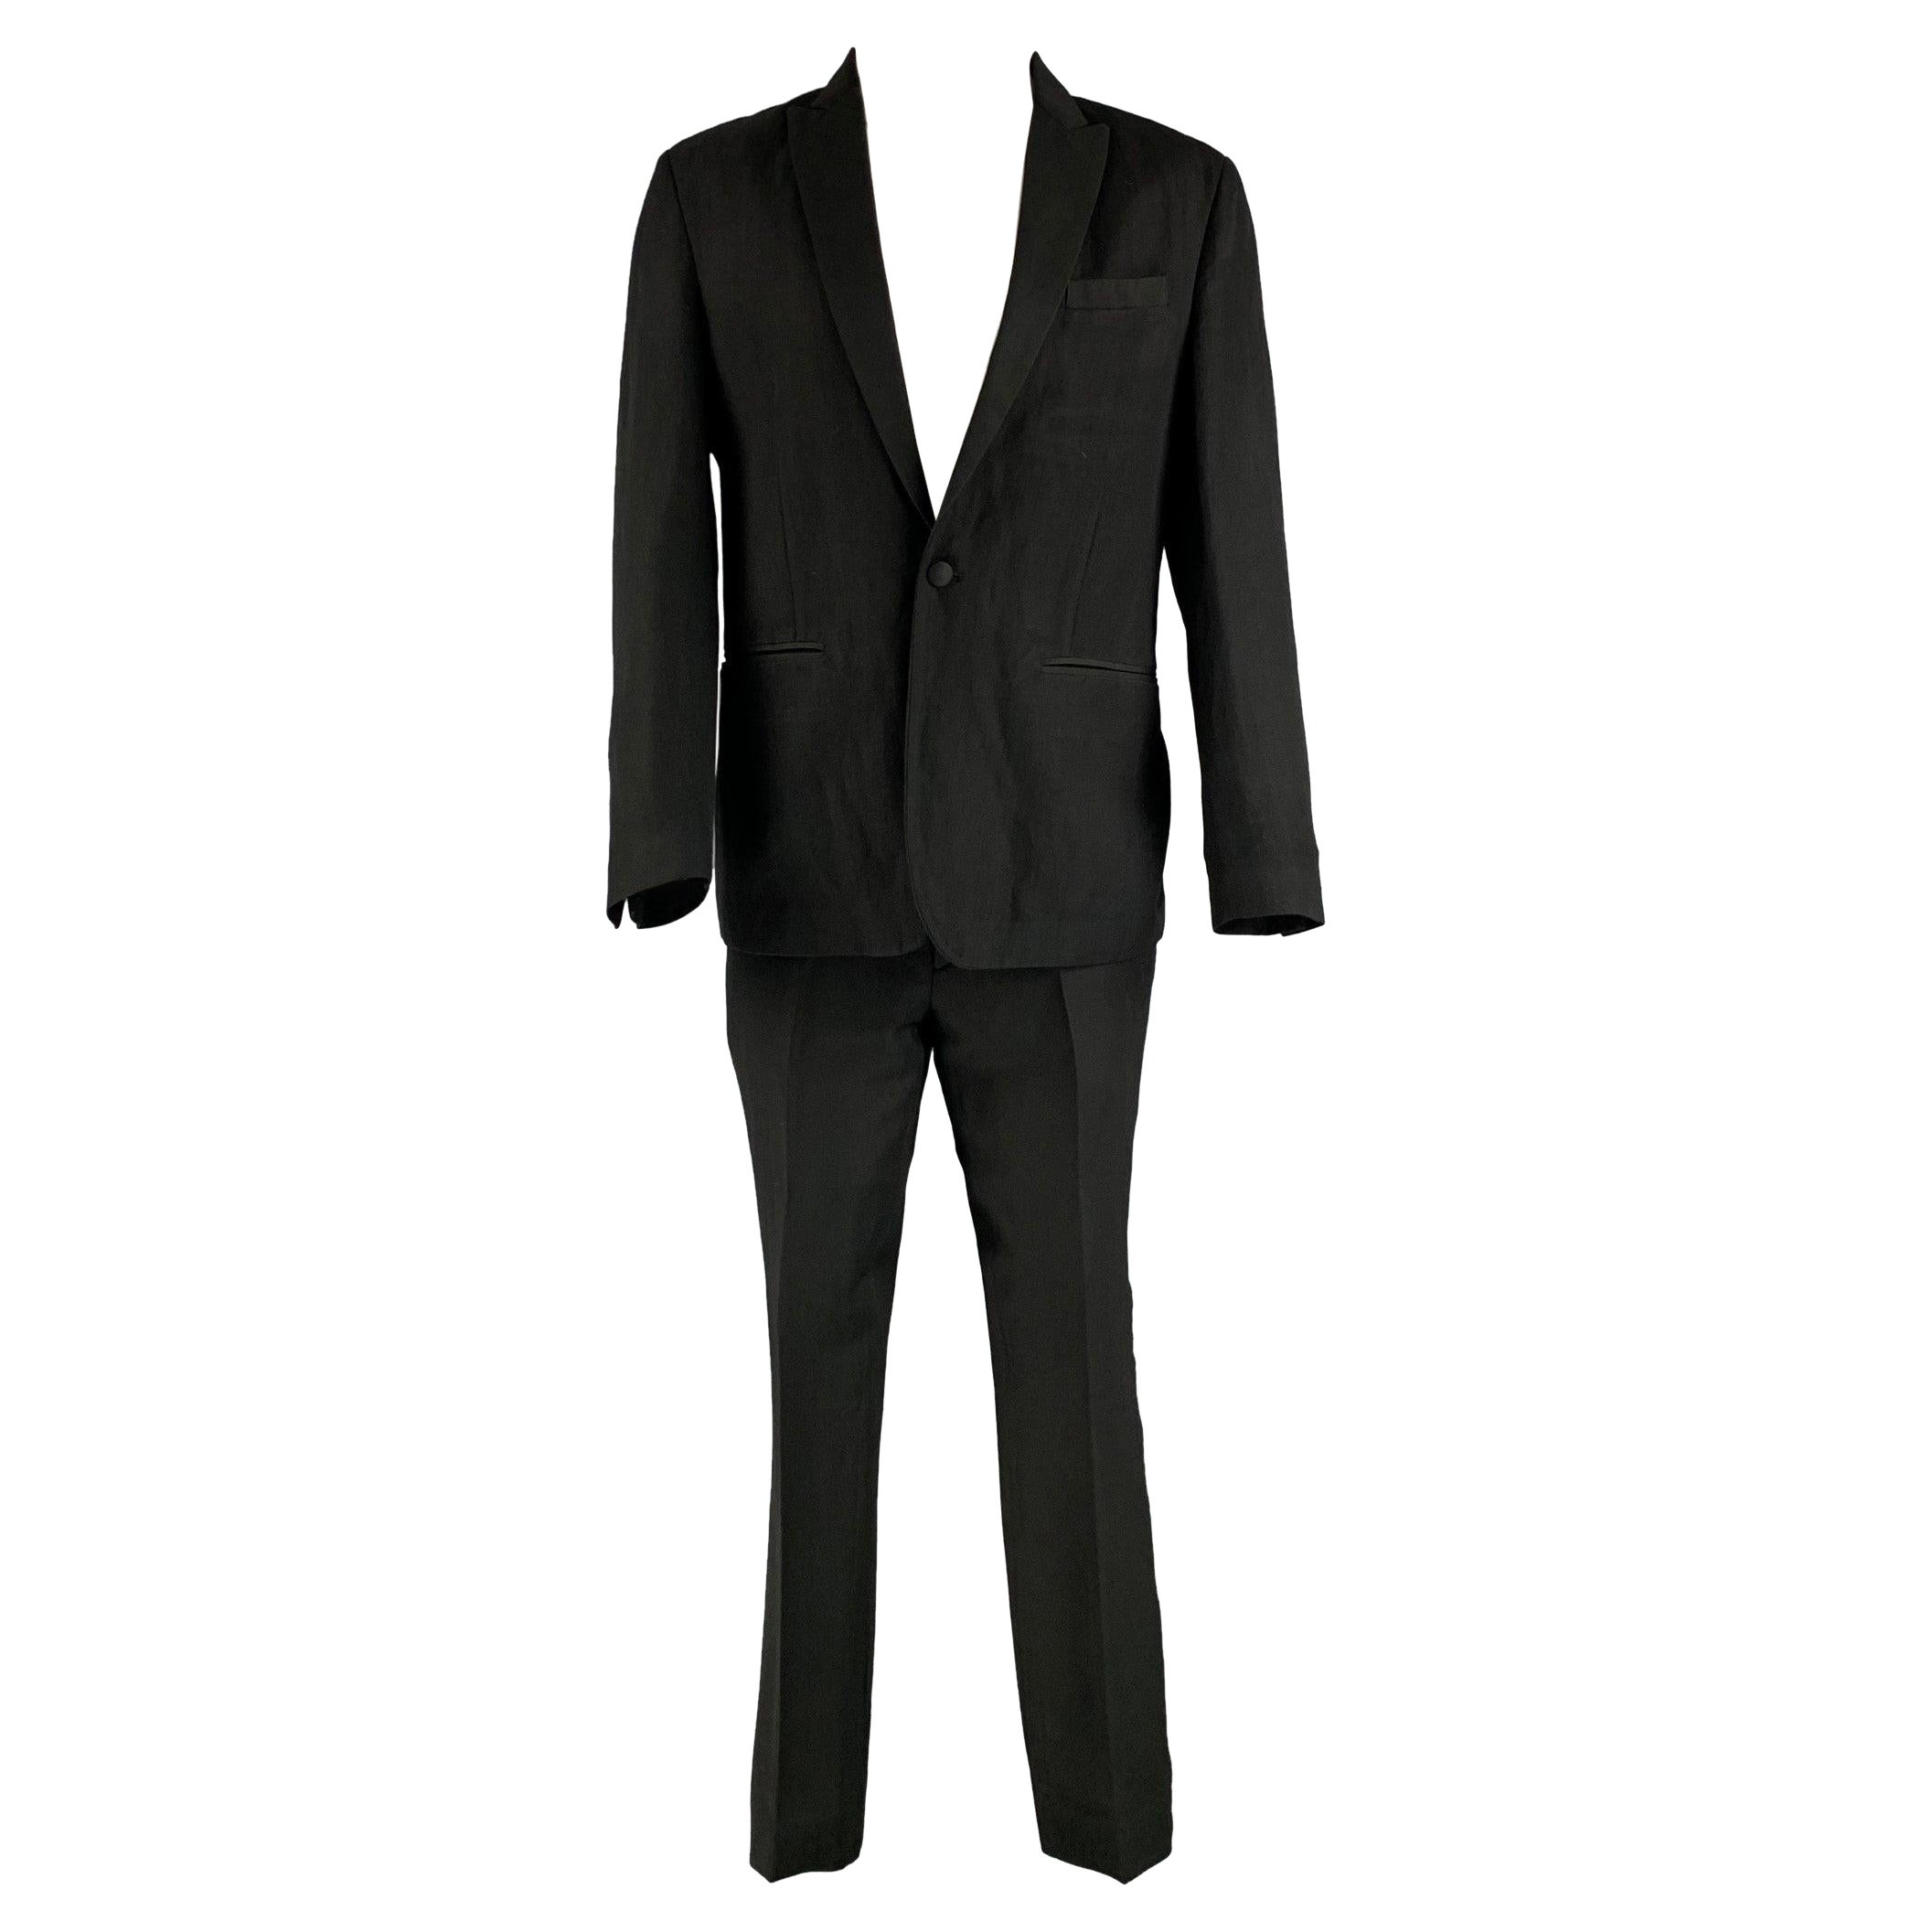 JOHN VARVATOS Size 40 Black Solid Linen Wool Peak Lapel Tuxedo For Sale